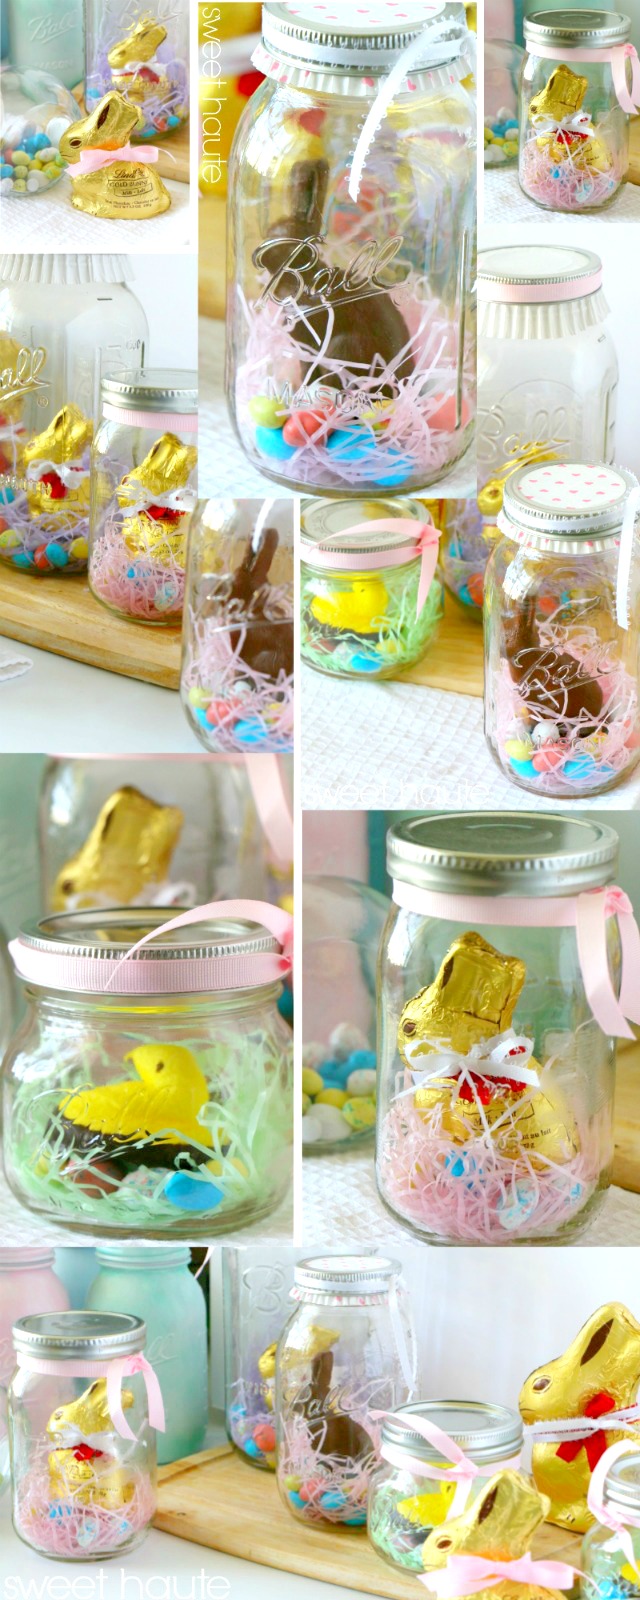 http://sweethaute.blogspot.com/2015/04/easter-bunny-mason-jars.html